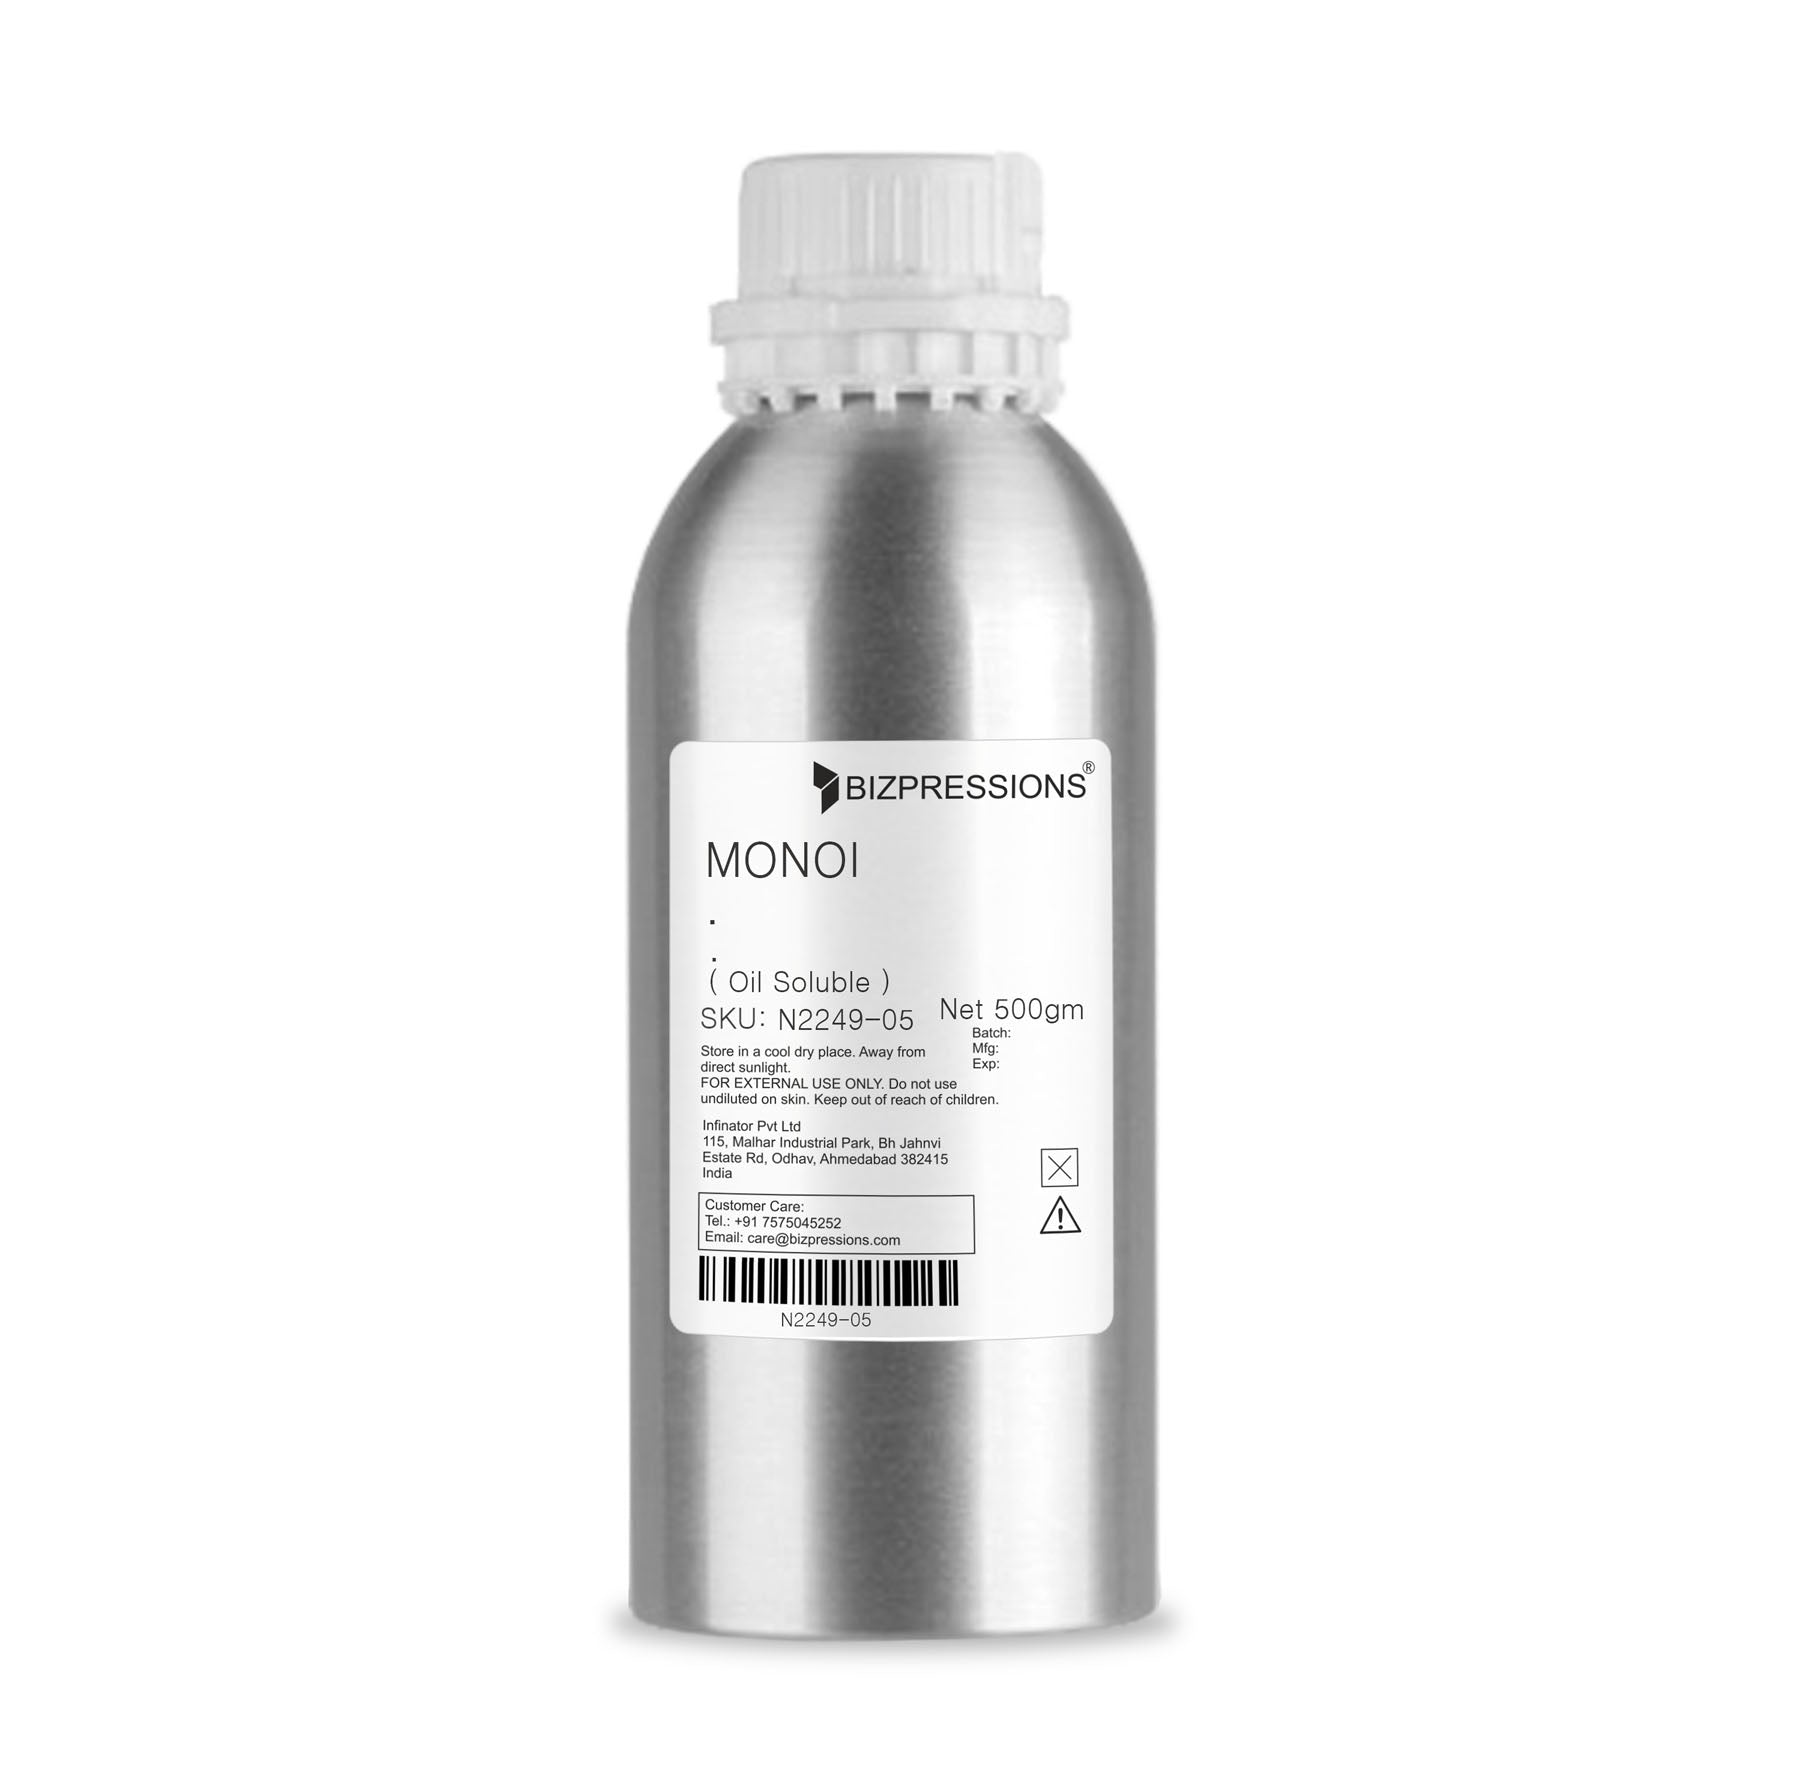 MONOI - Fragrance ( Oil Soluble ) - 500 gm